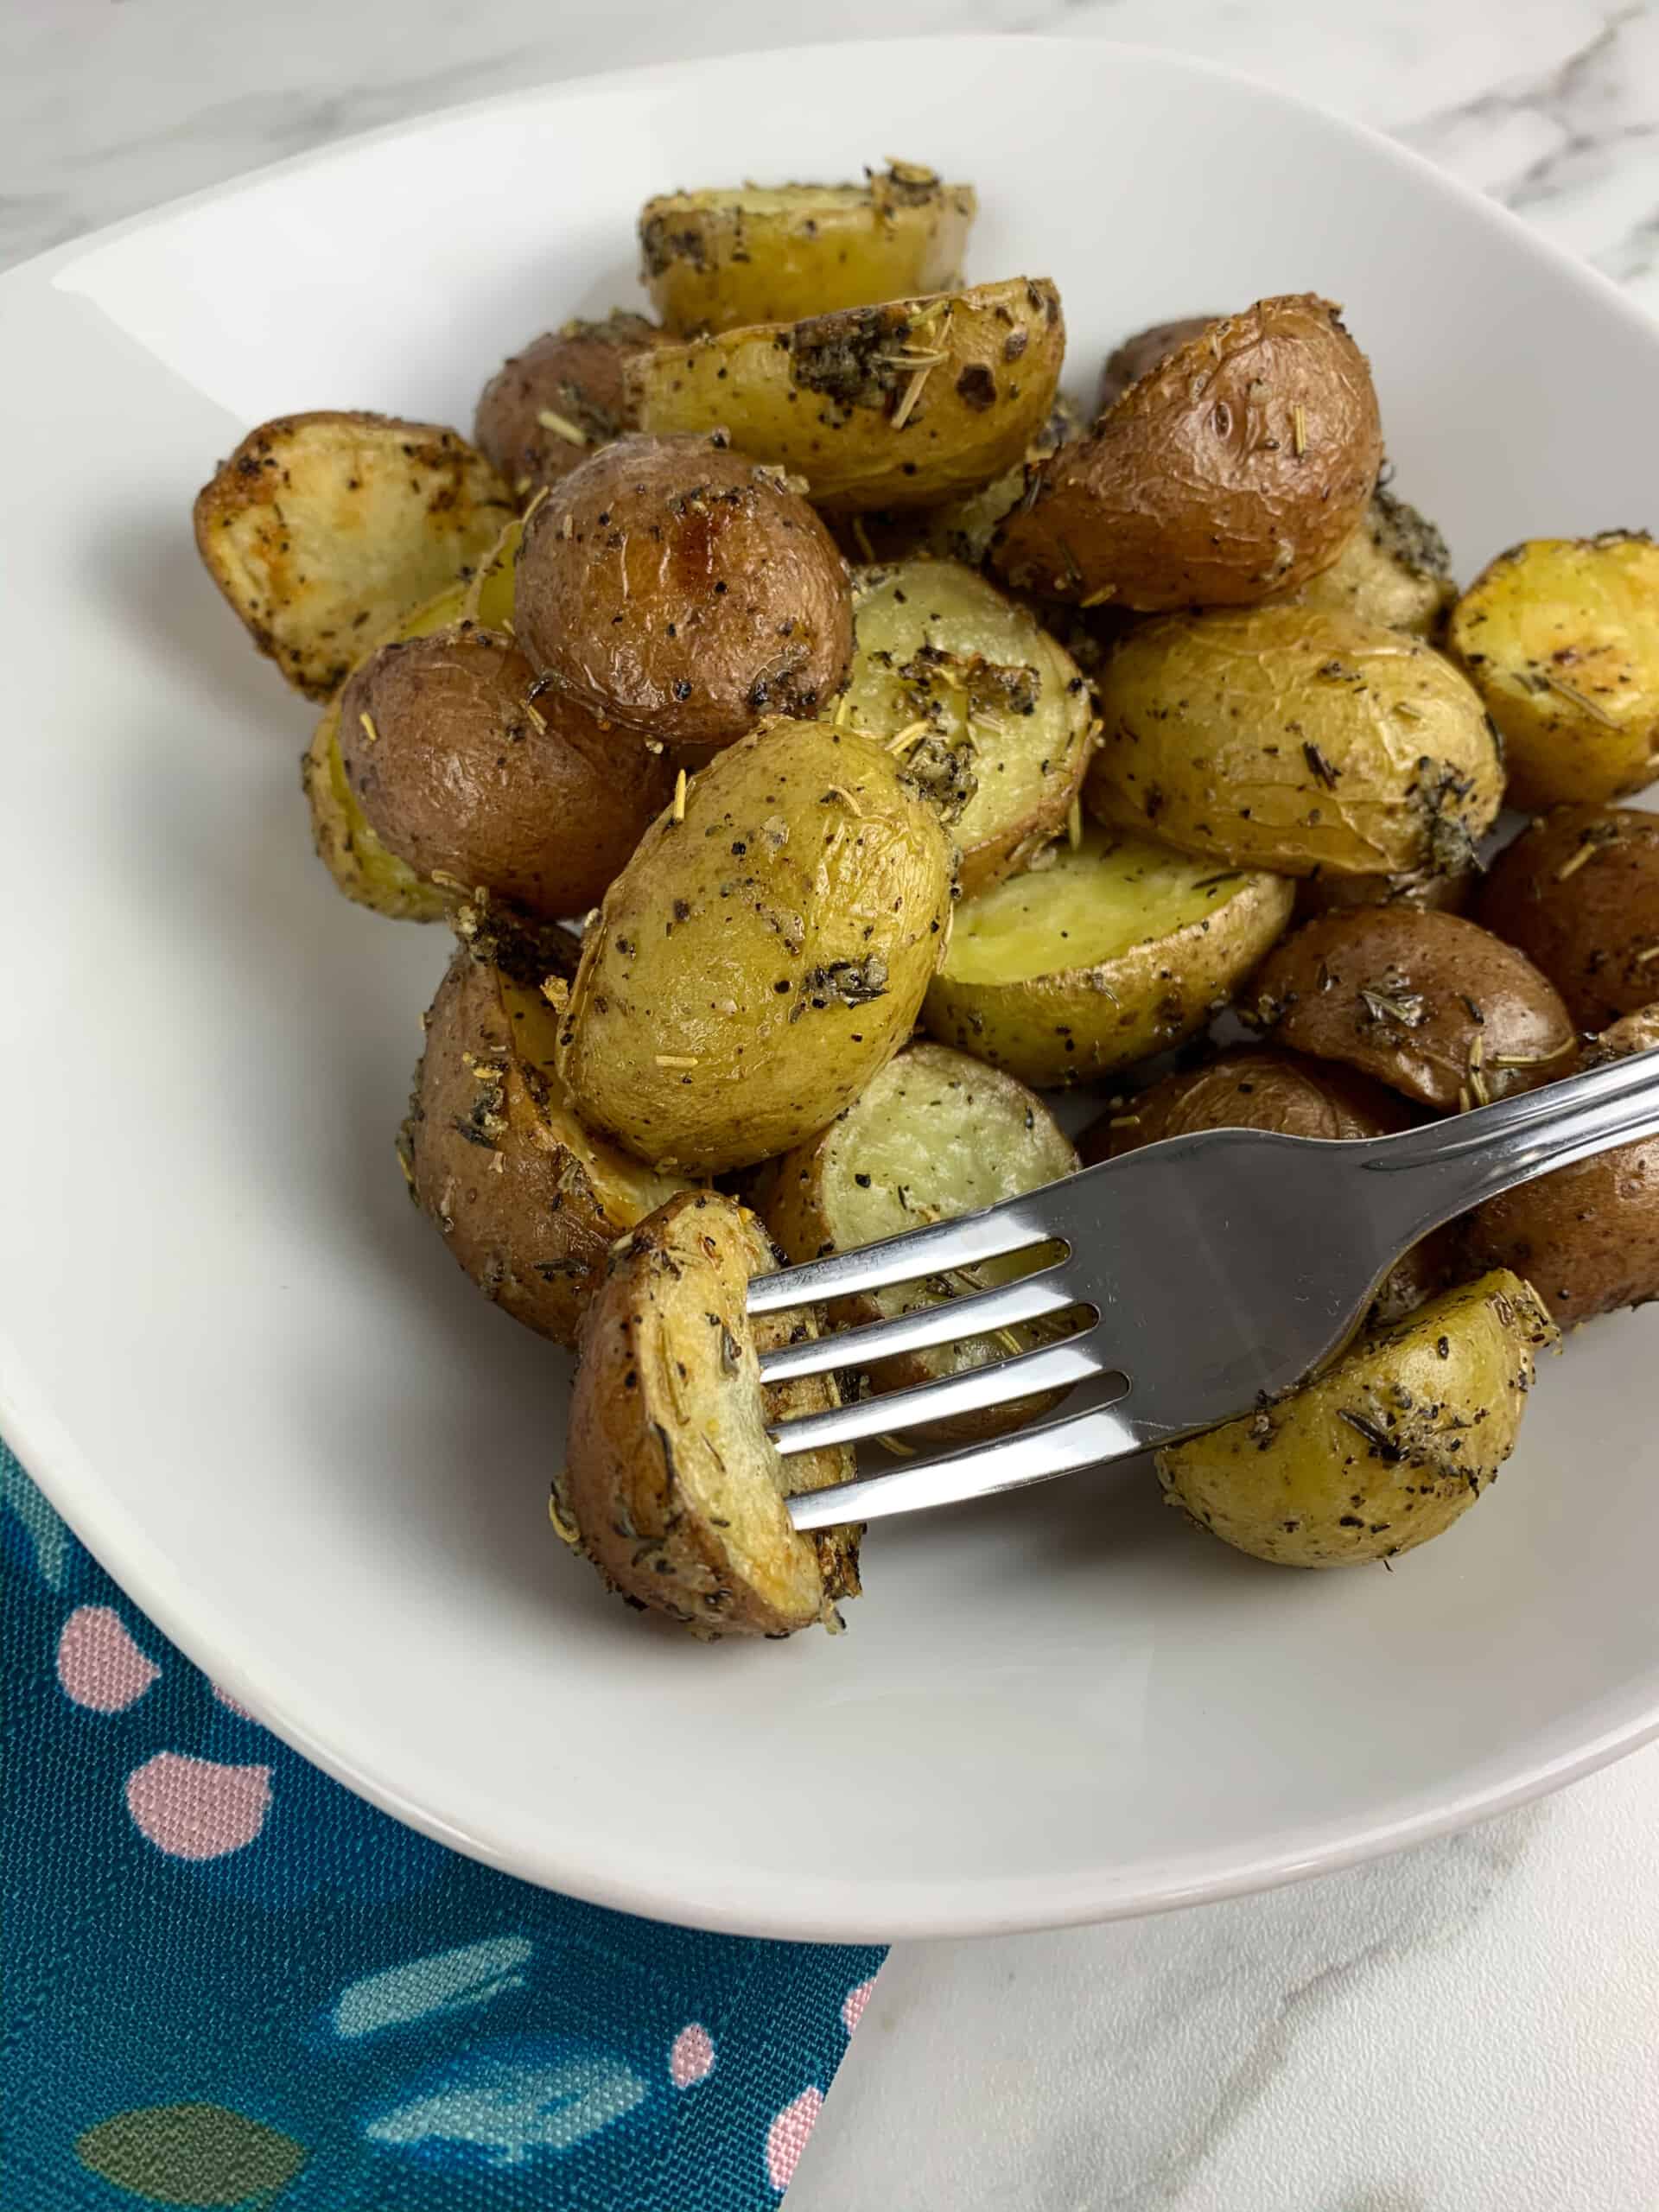 roasted potatoes on a plate